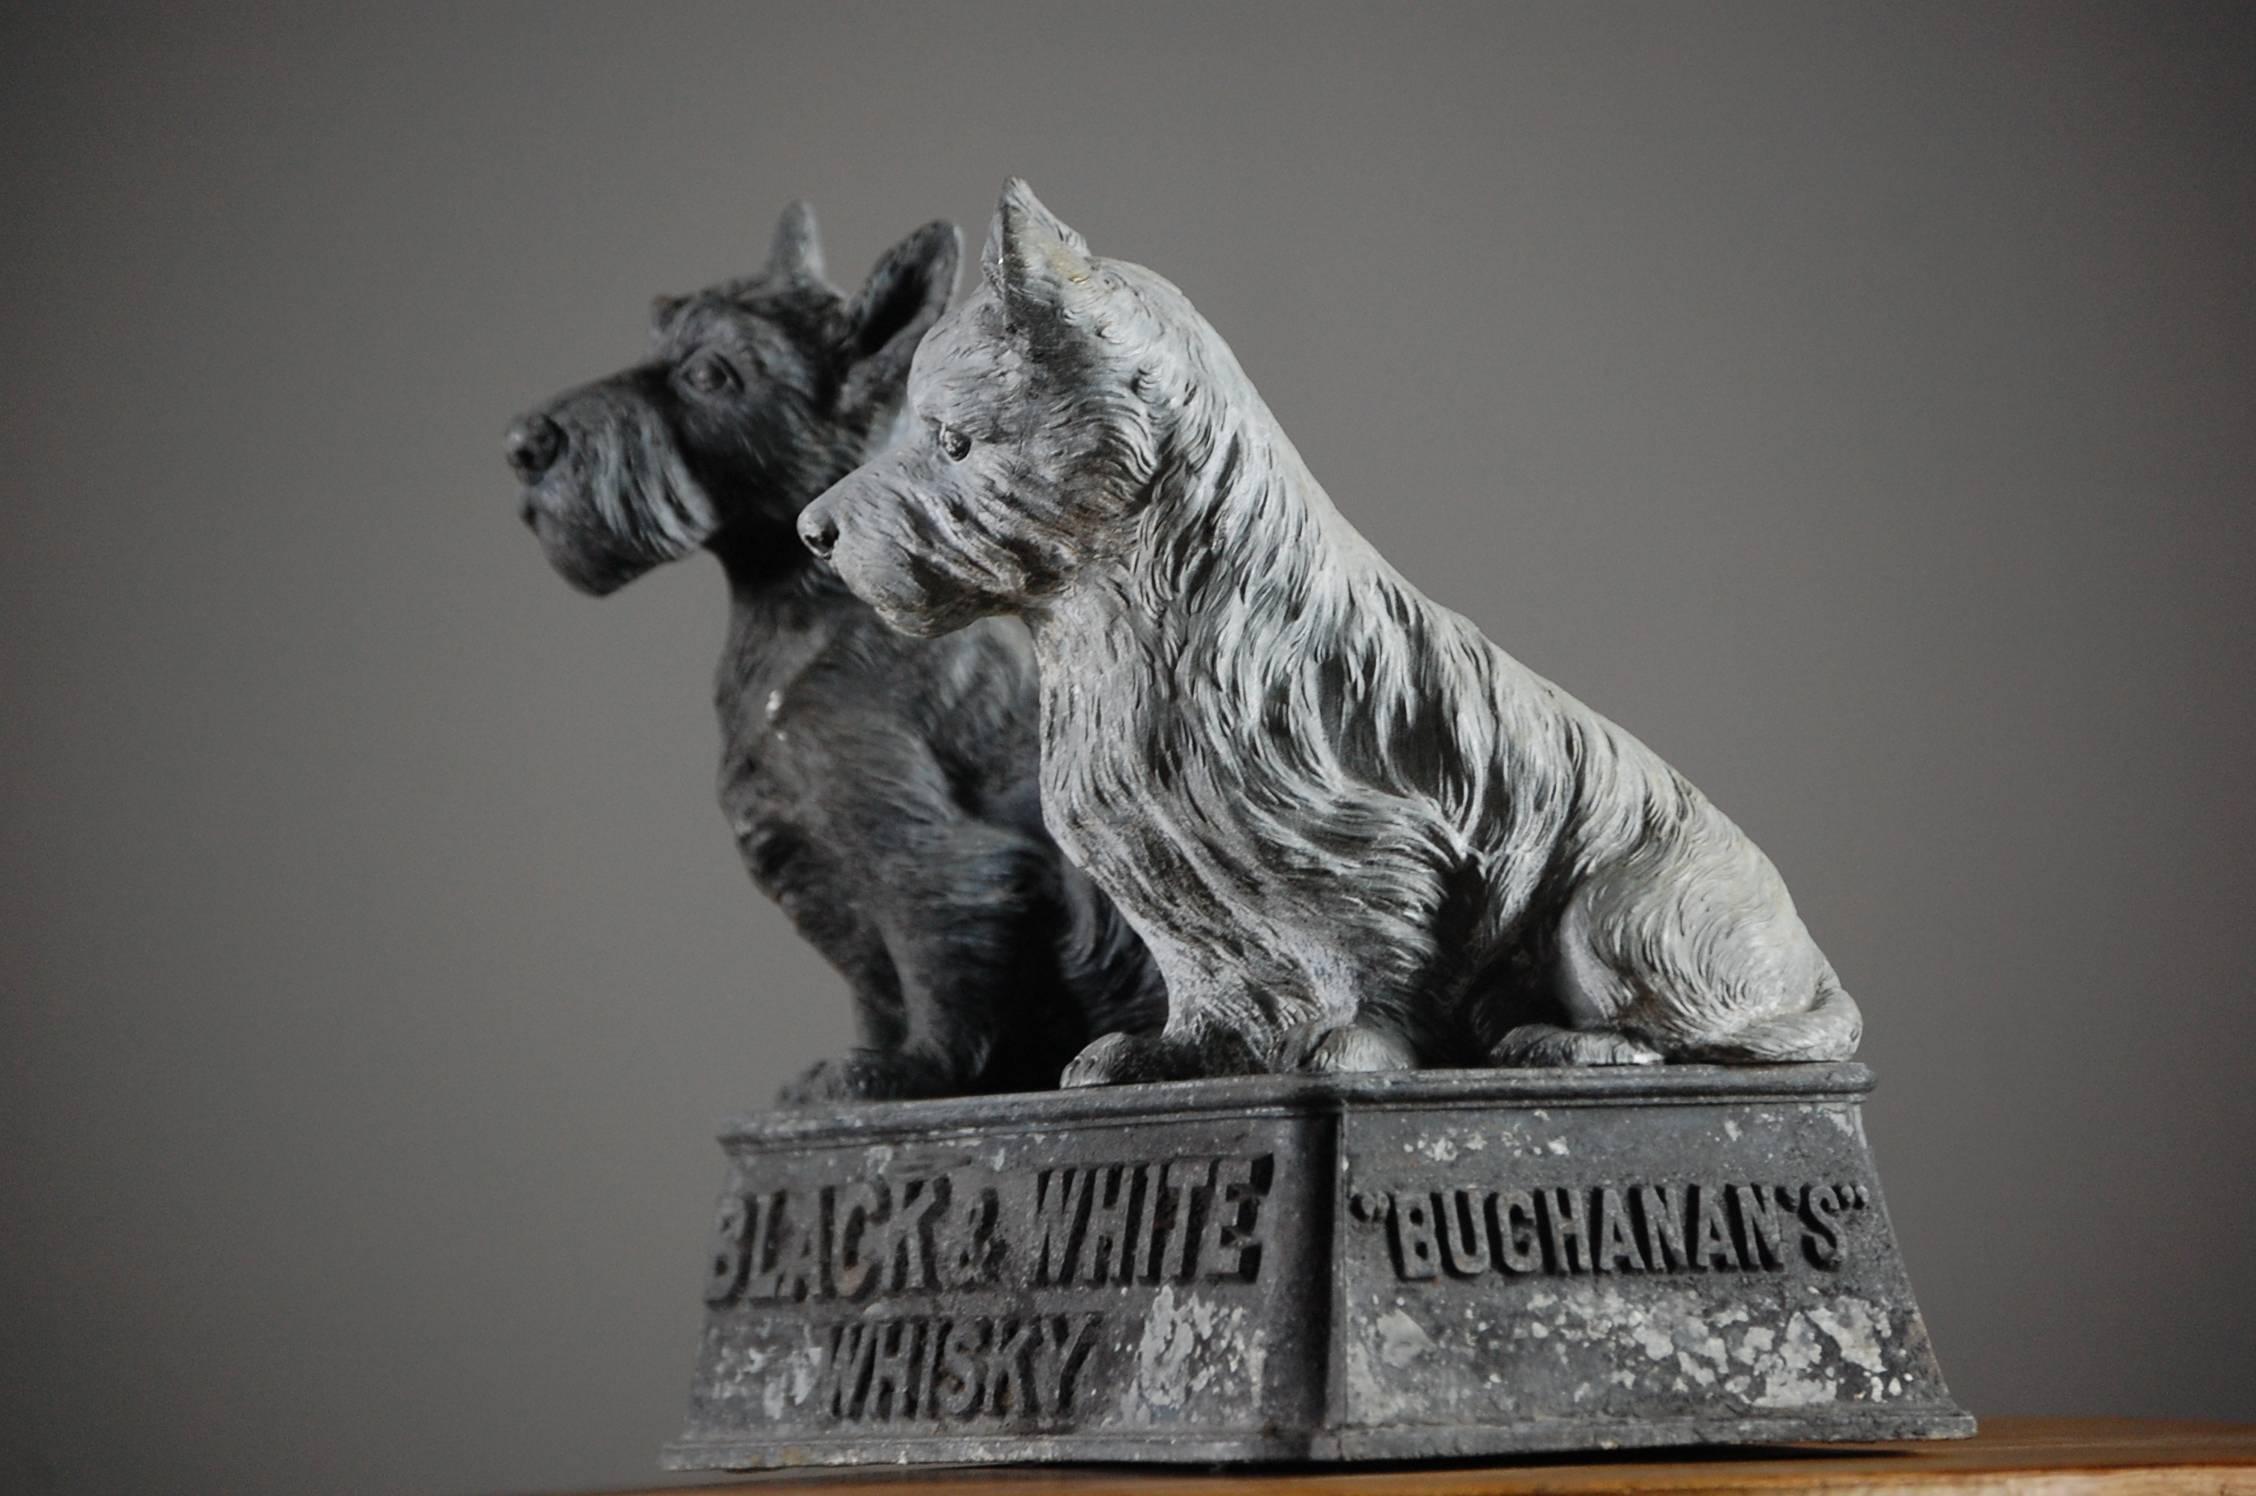 Spelter Buchanans Whiskey Advertisng Black and White Scotty Dogs 